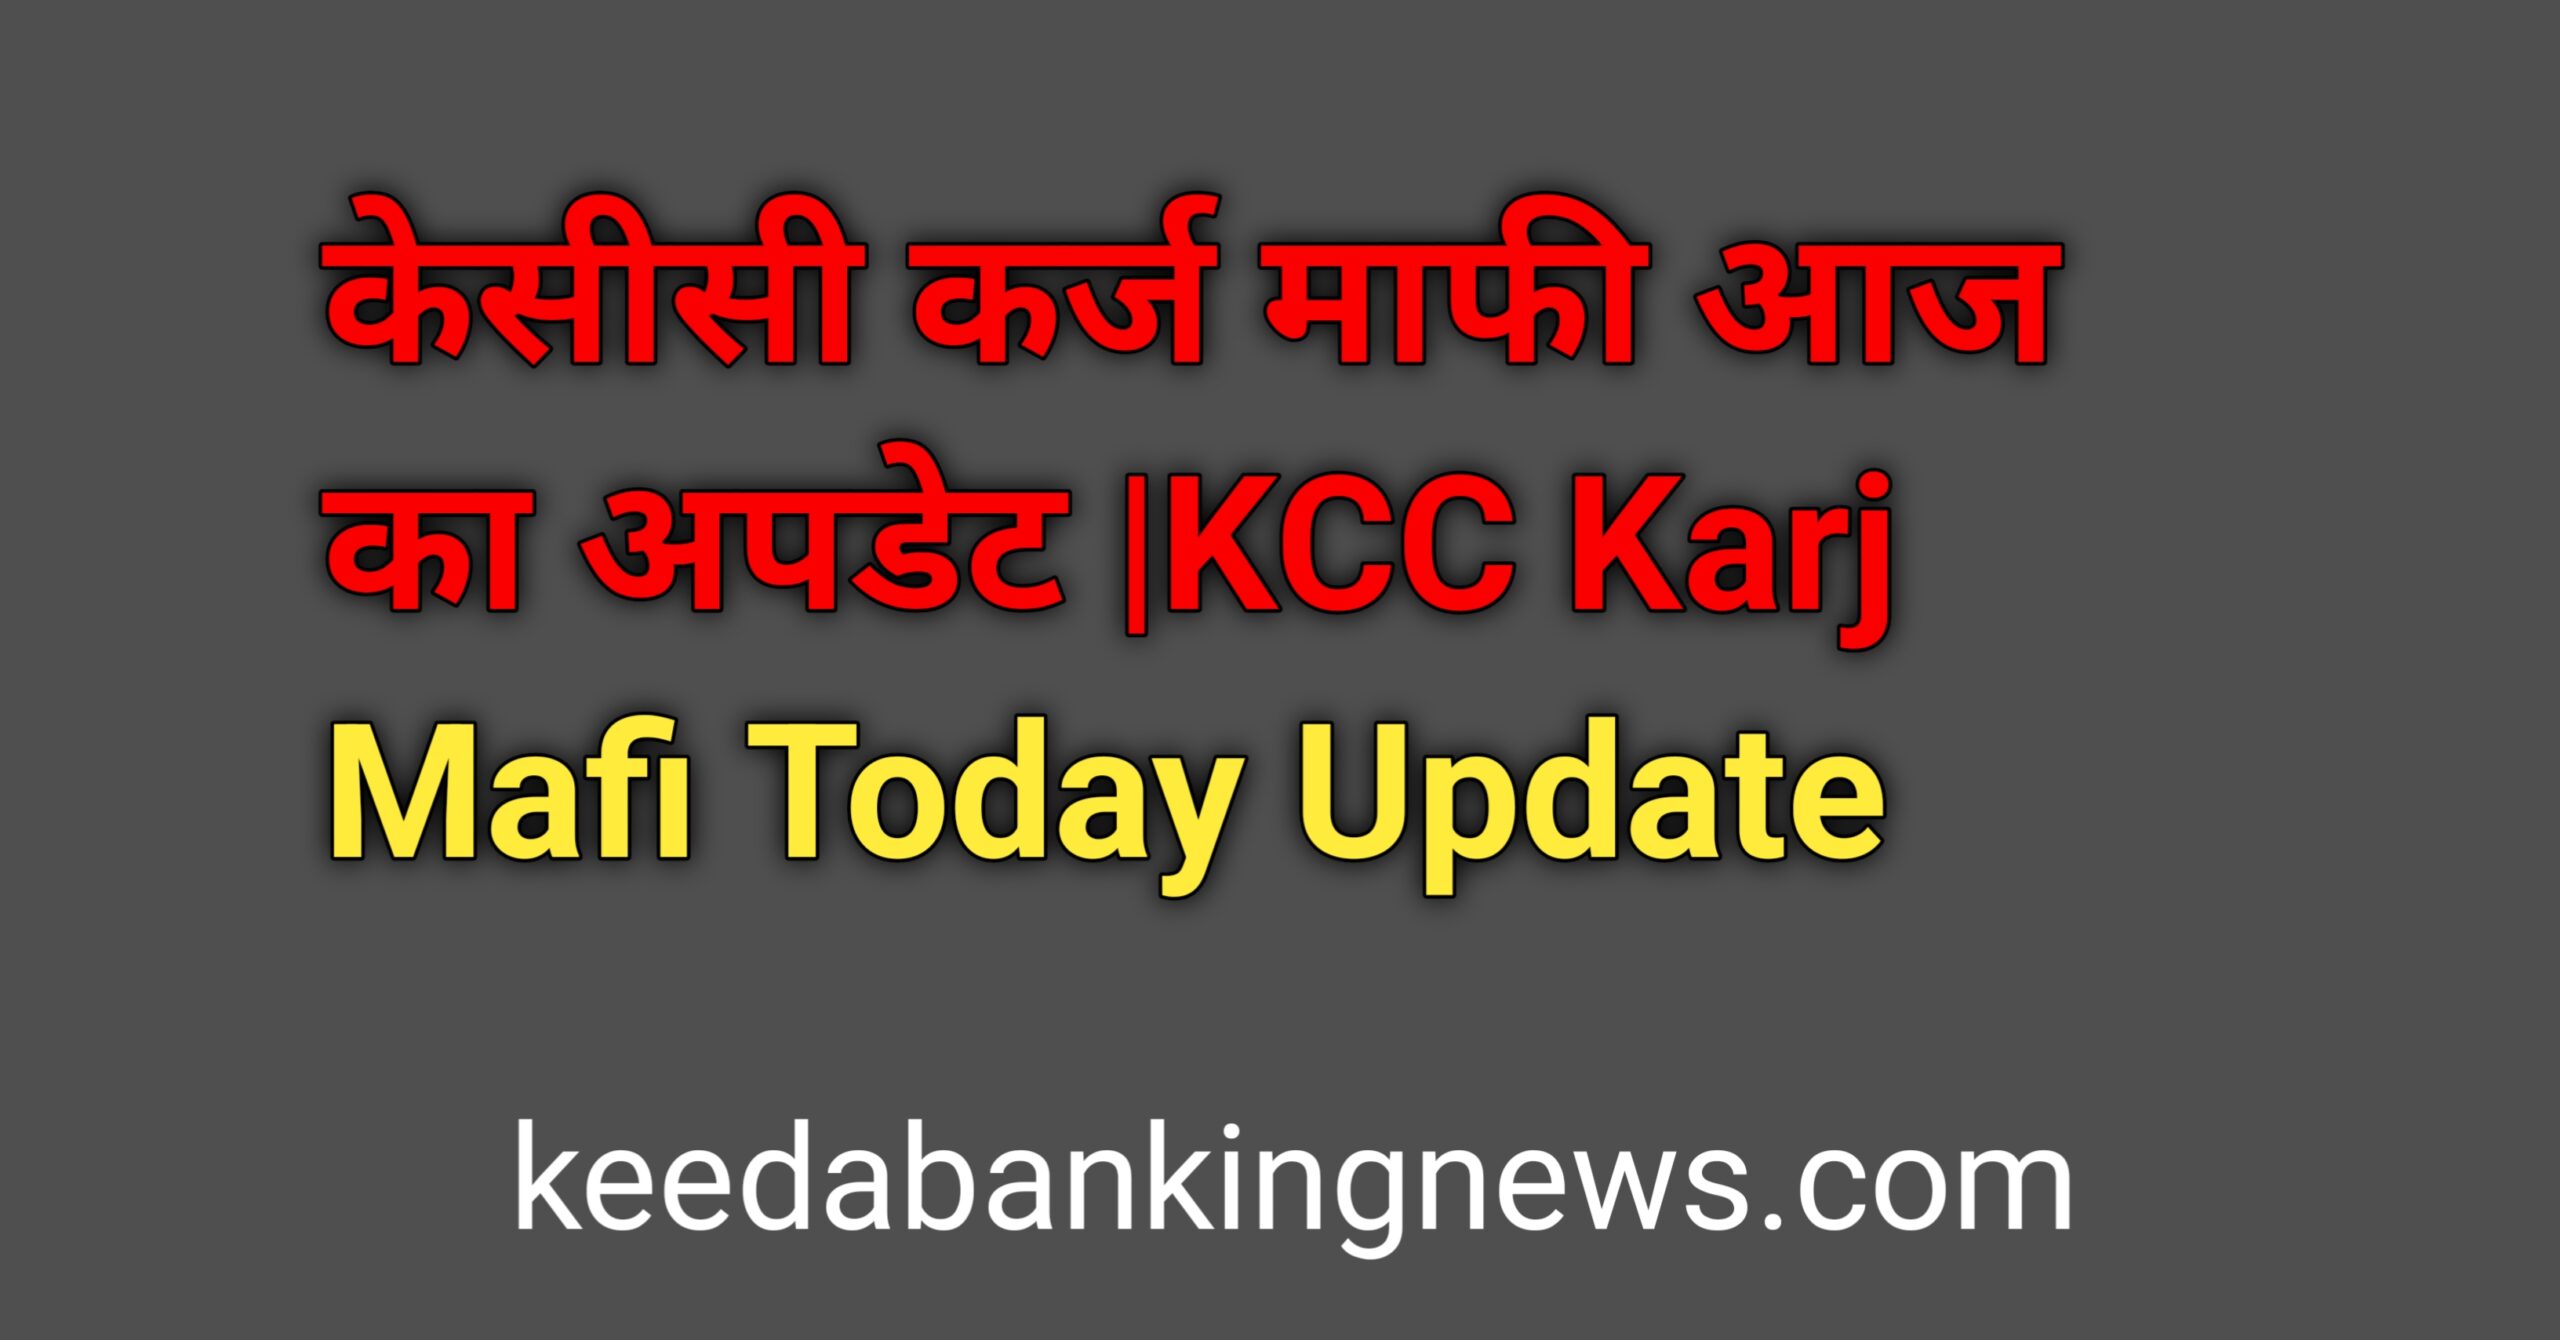 KCC Karj Mafi Today Update